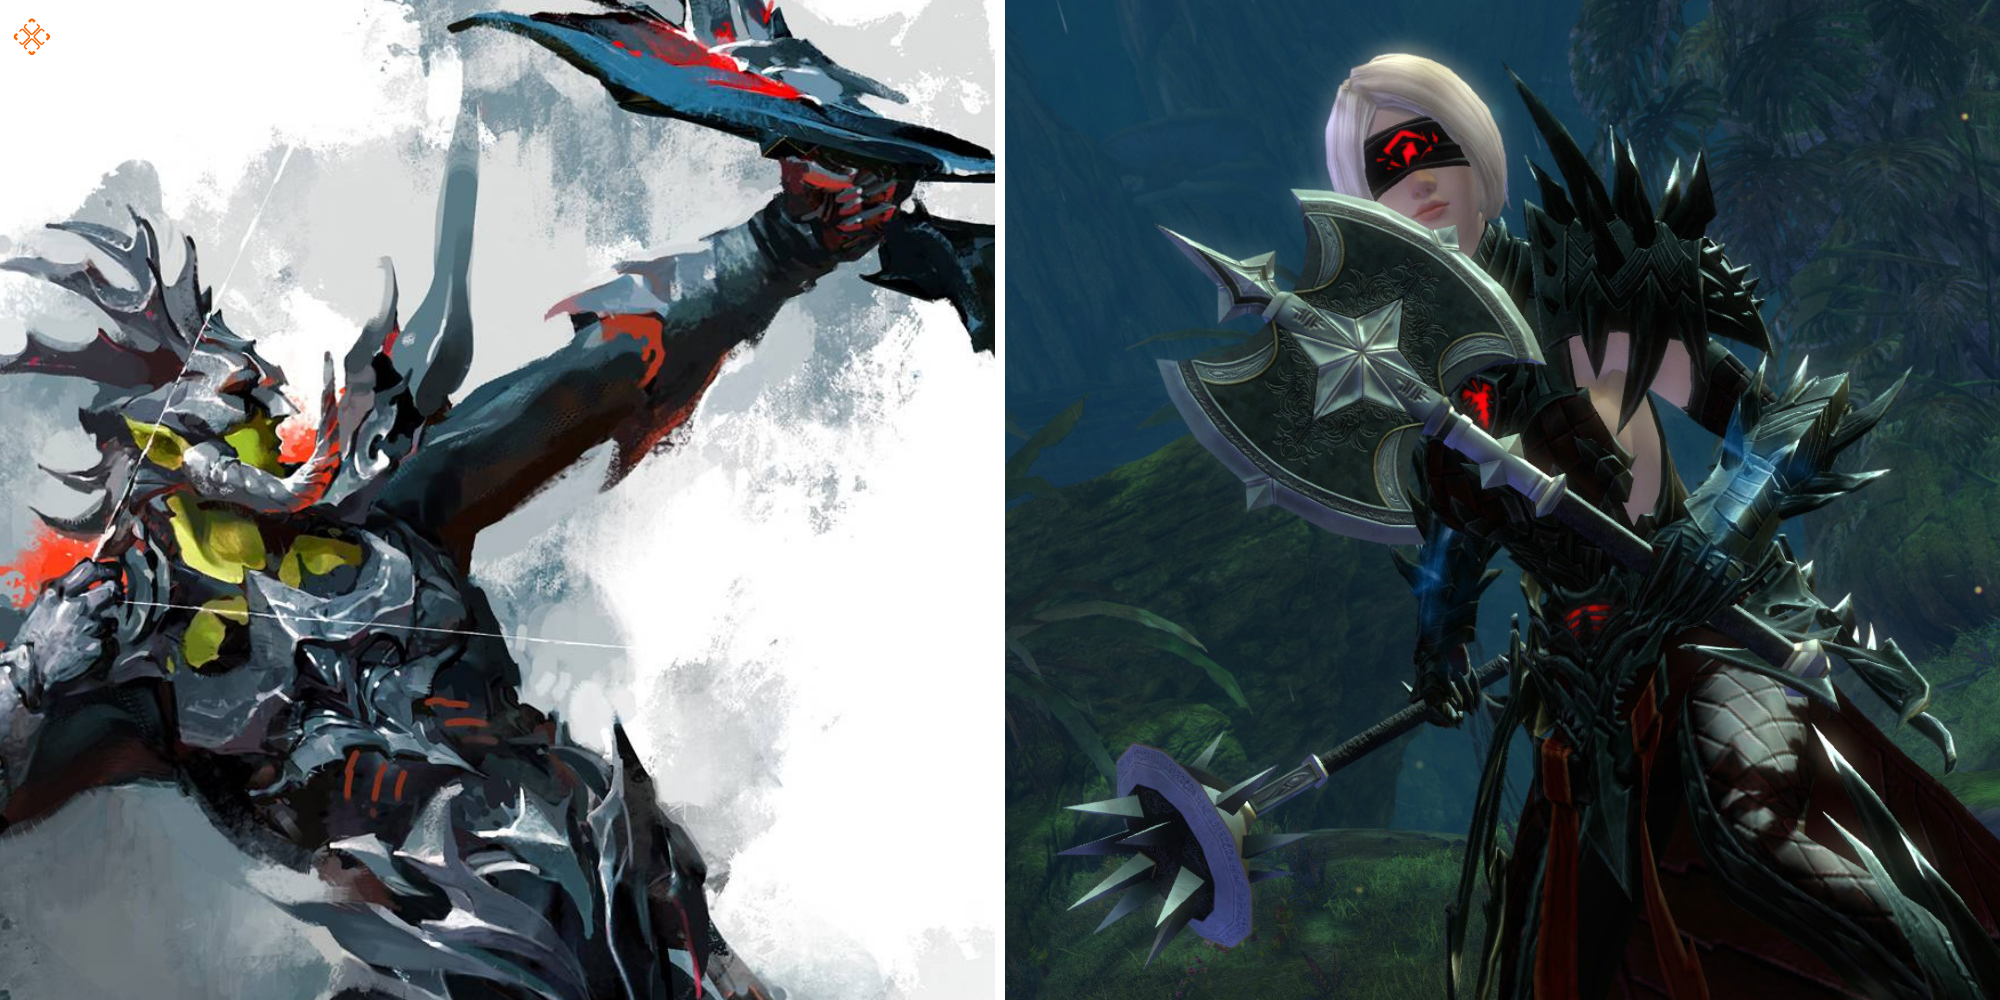 Guild Wars 2 Revenant - Concept art on left, Player in-game screenshot on right